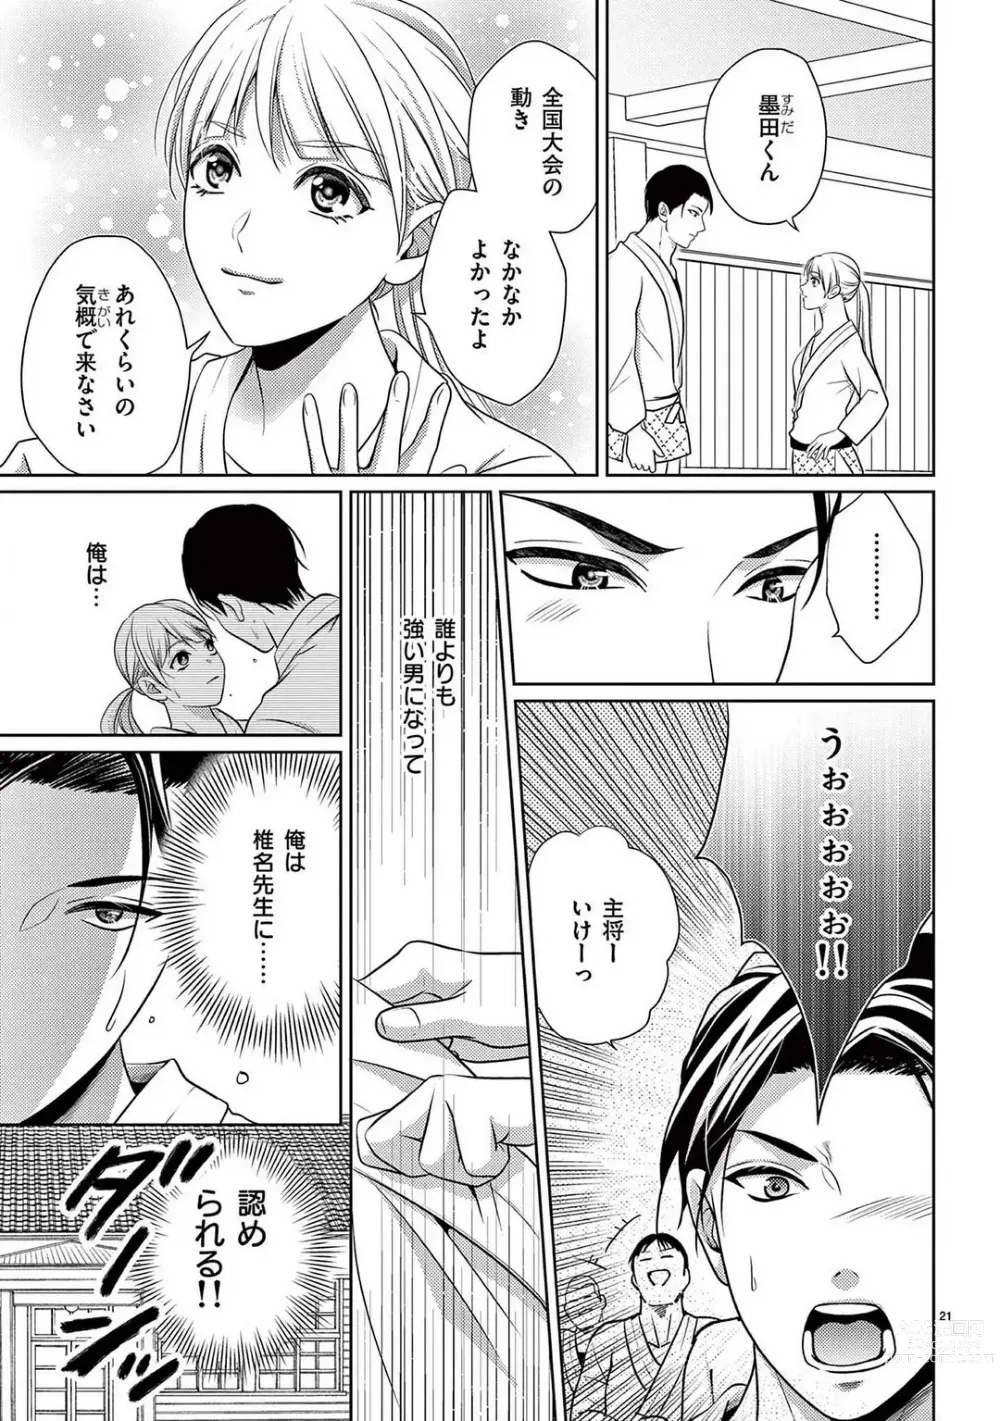 Page 182 of manga Sono Ase, Sekkusu Pafuyūmu. 〜 Sutte, Kisushite, Musabotte~Chp.1-7